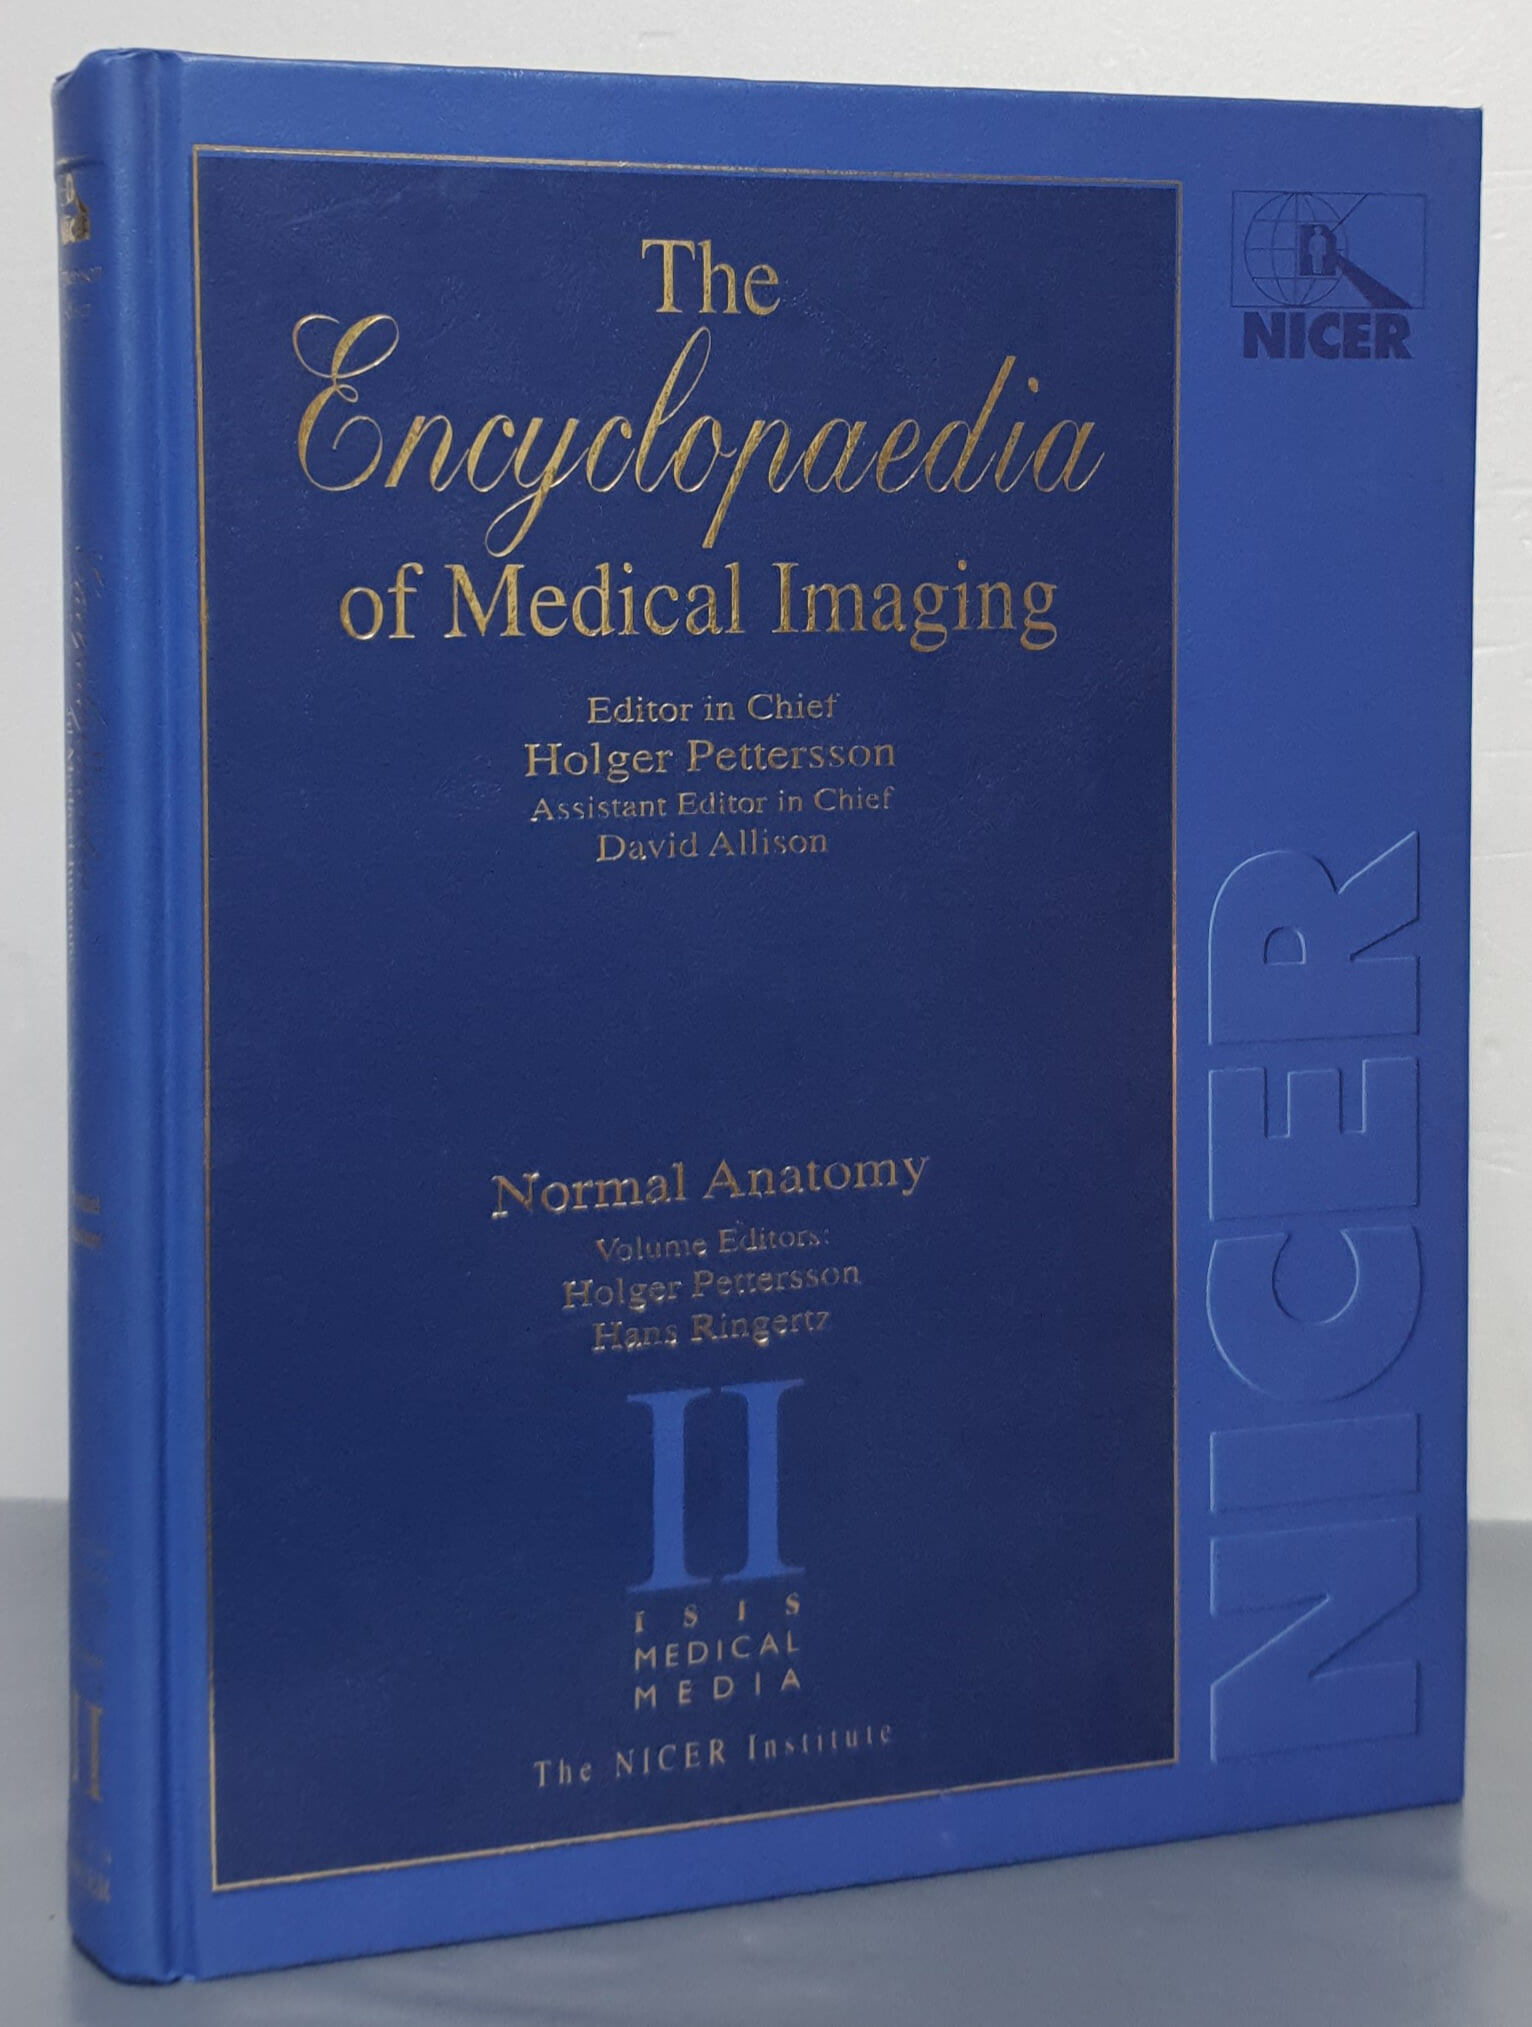 The Encyclopaedia of Medical Imaging 2